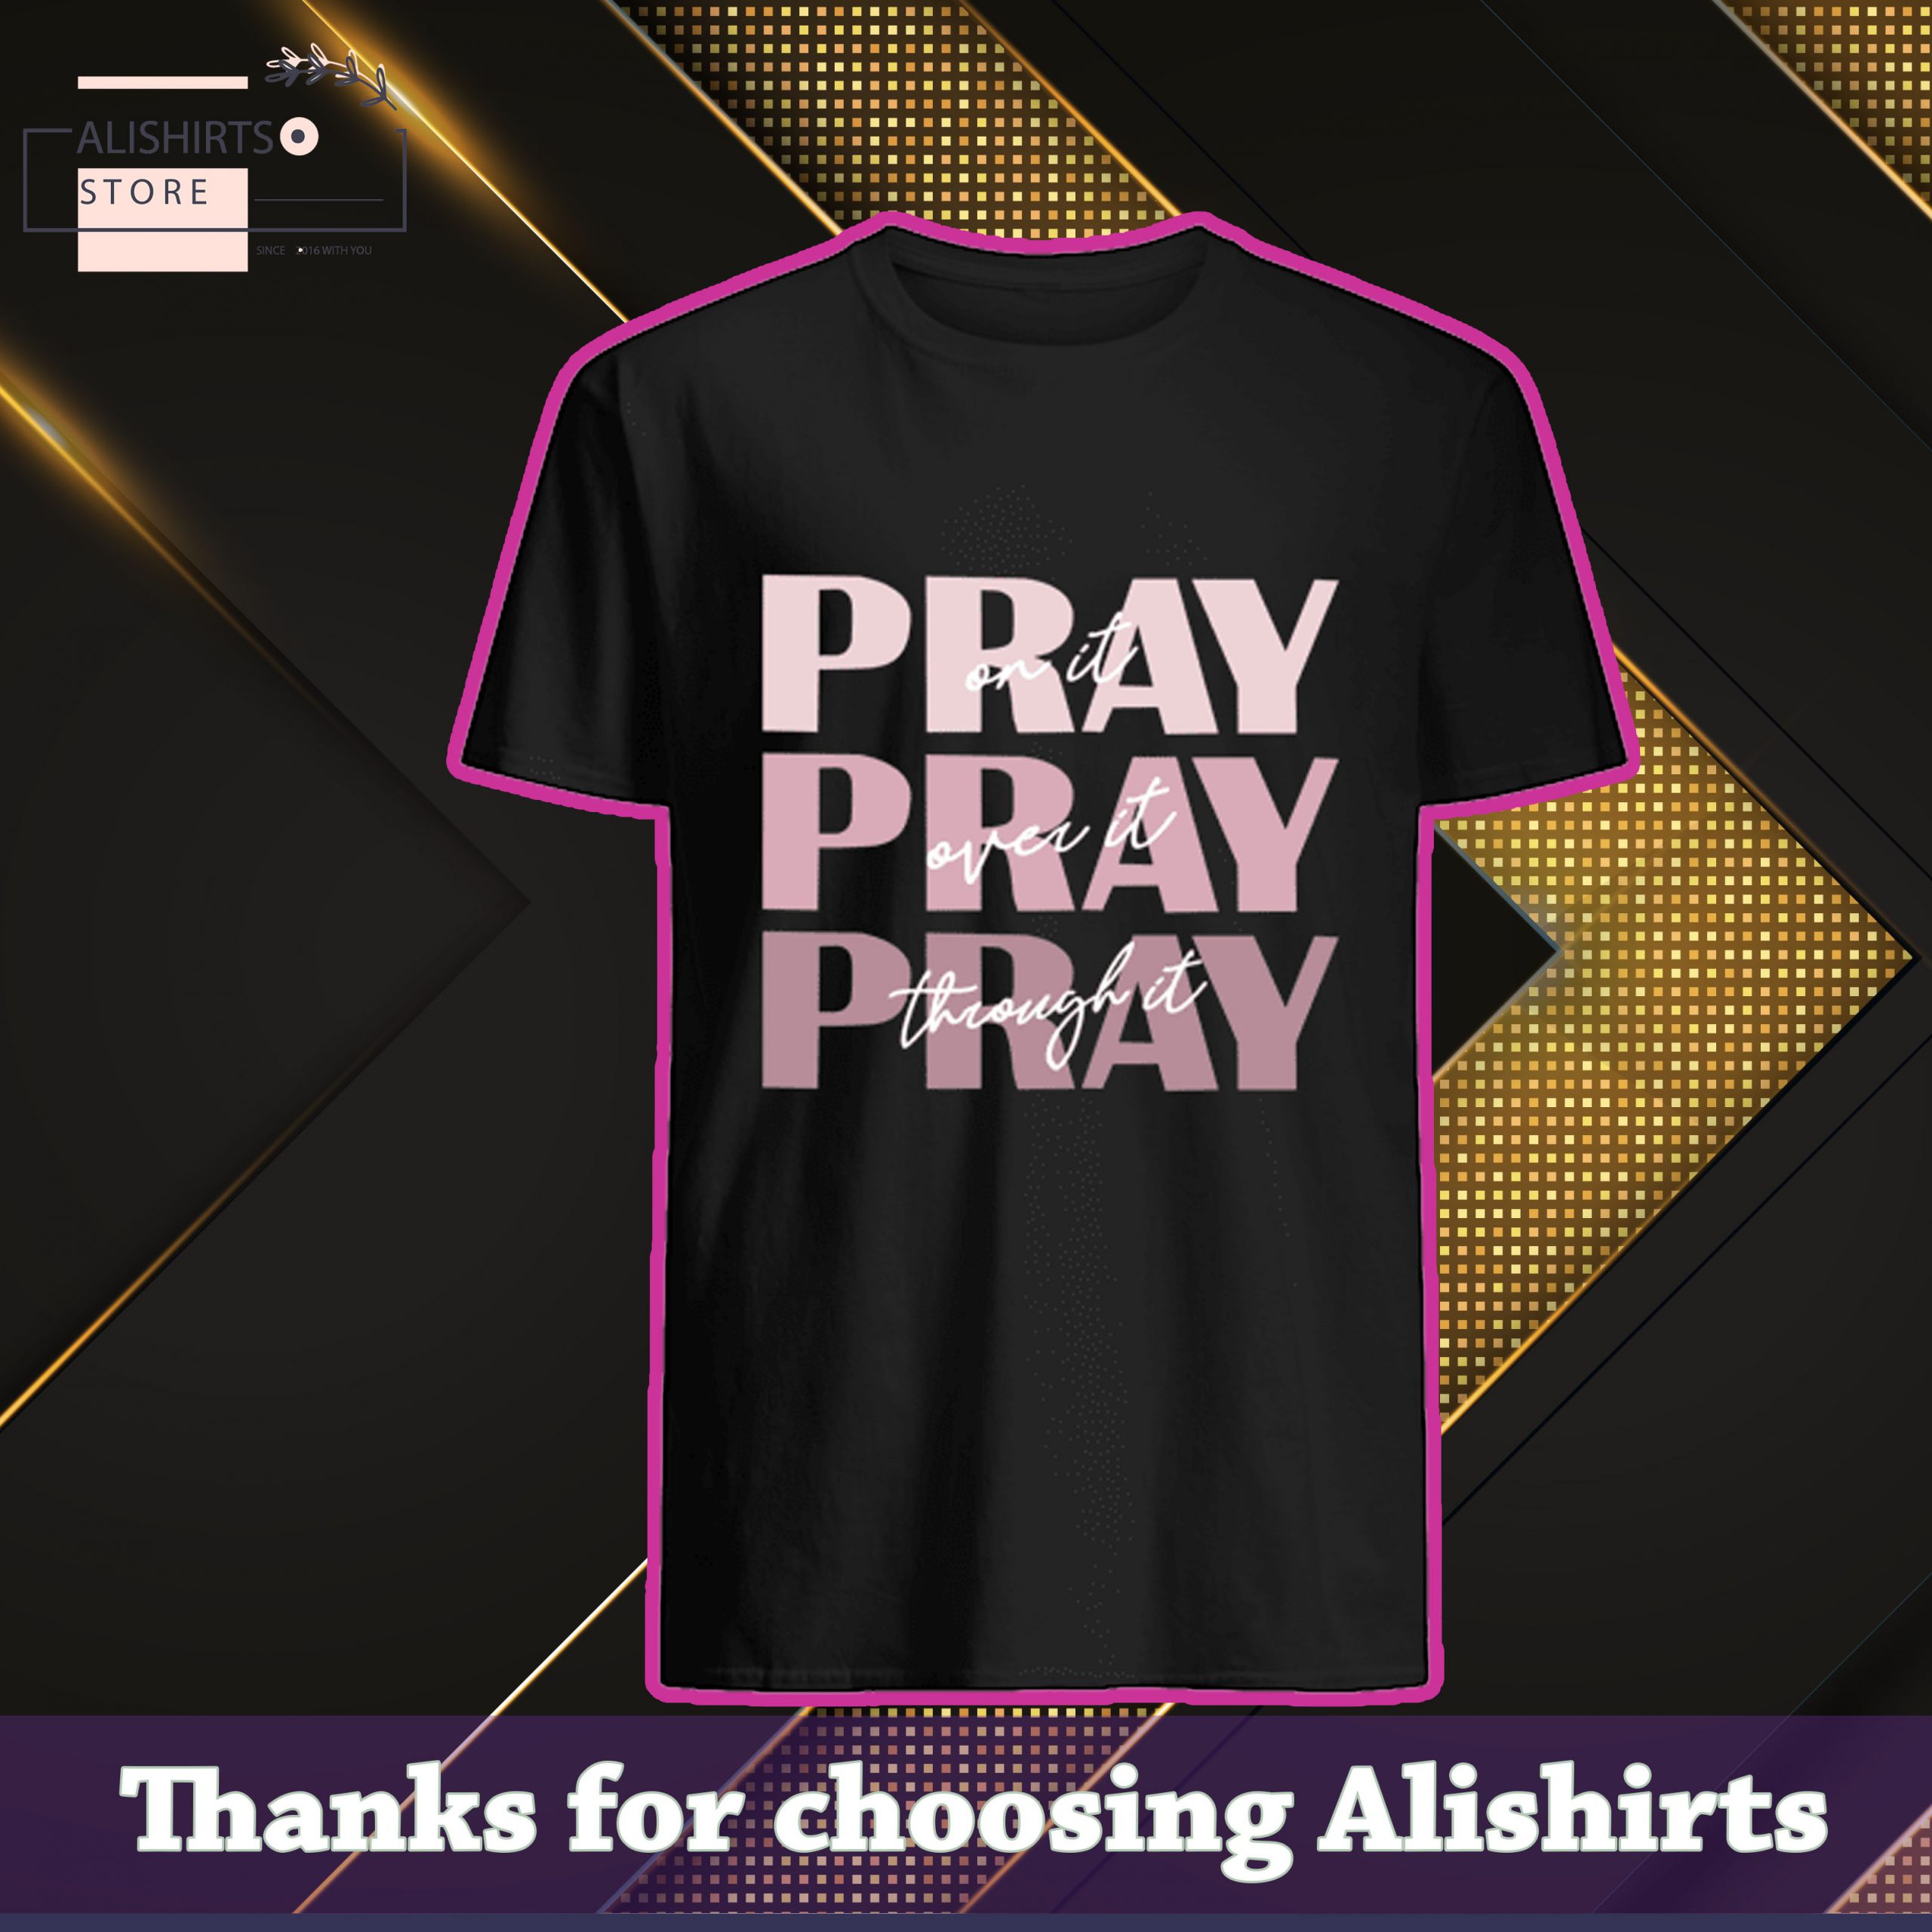 Pray on it pray over it pray through it shirt